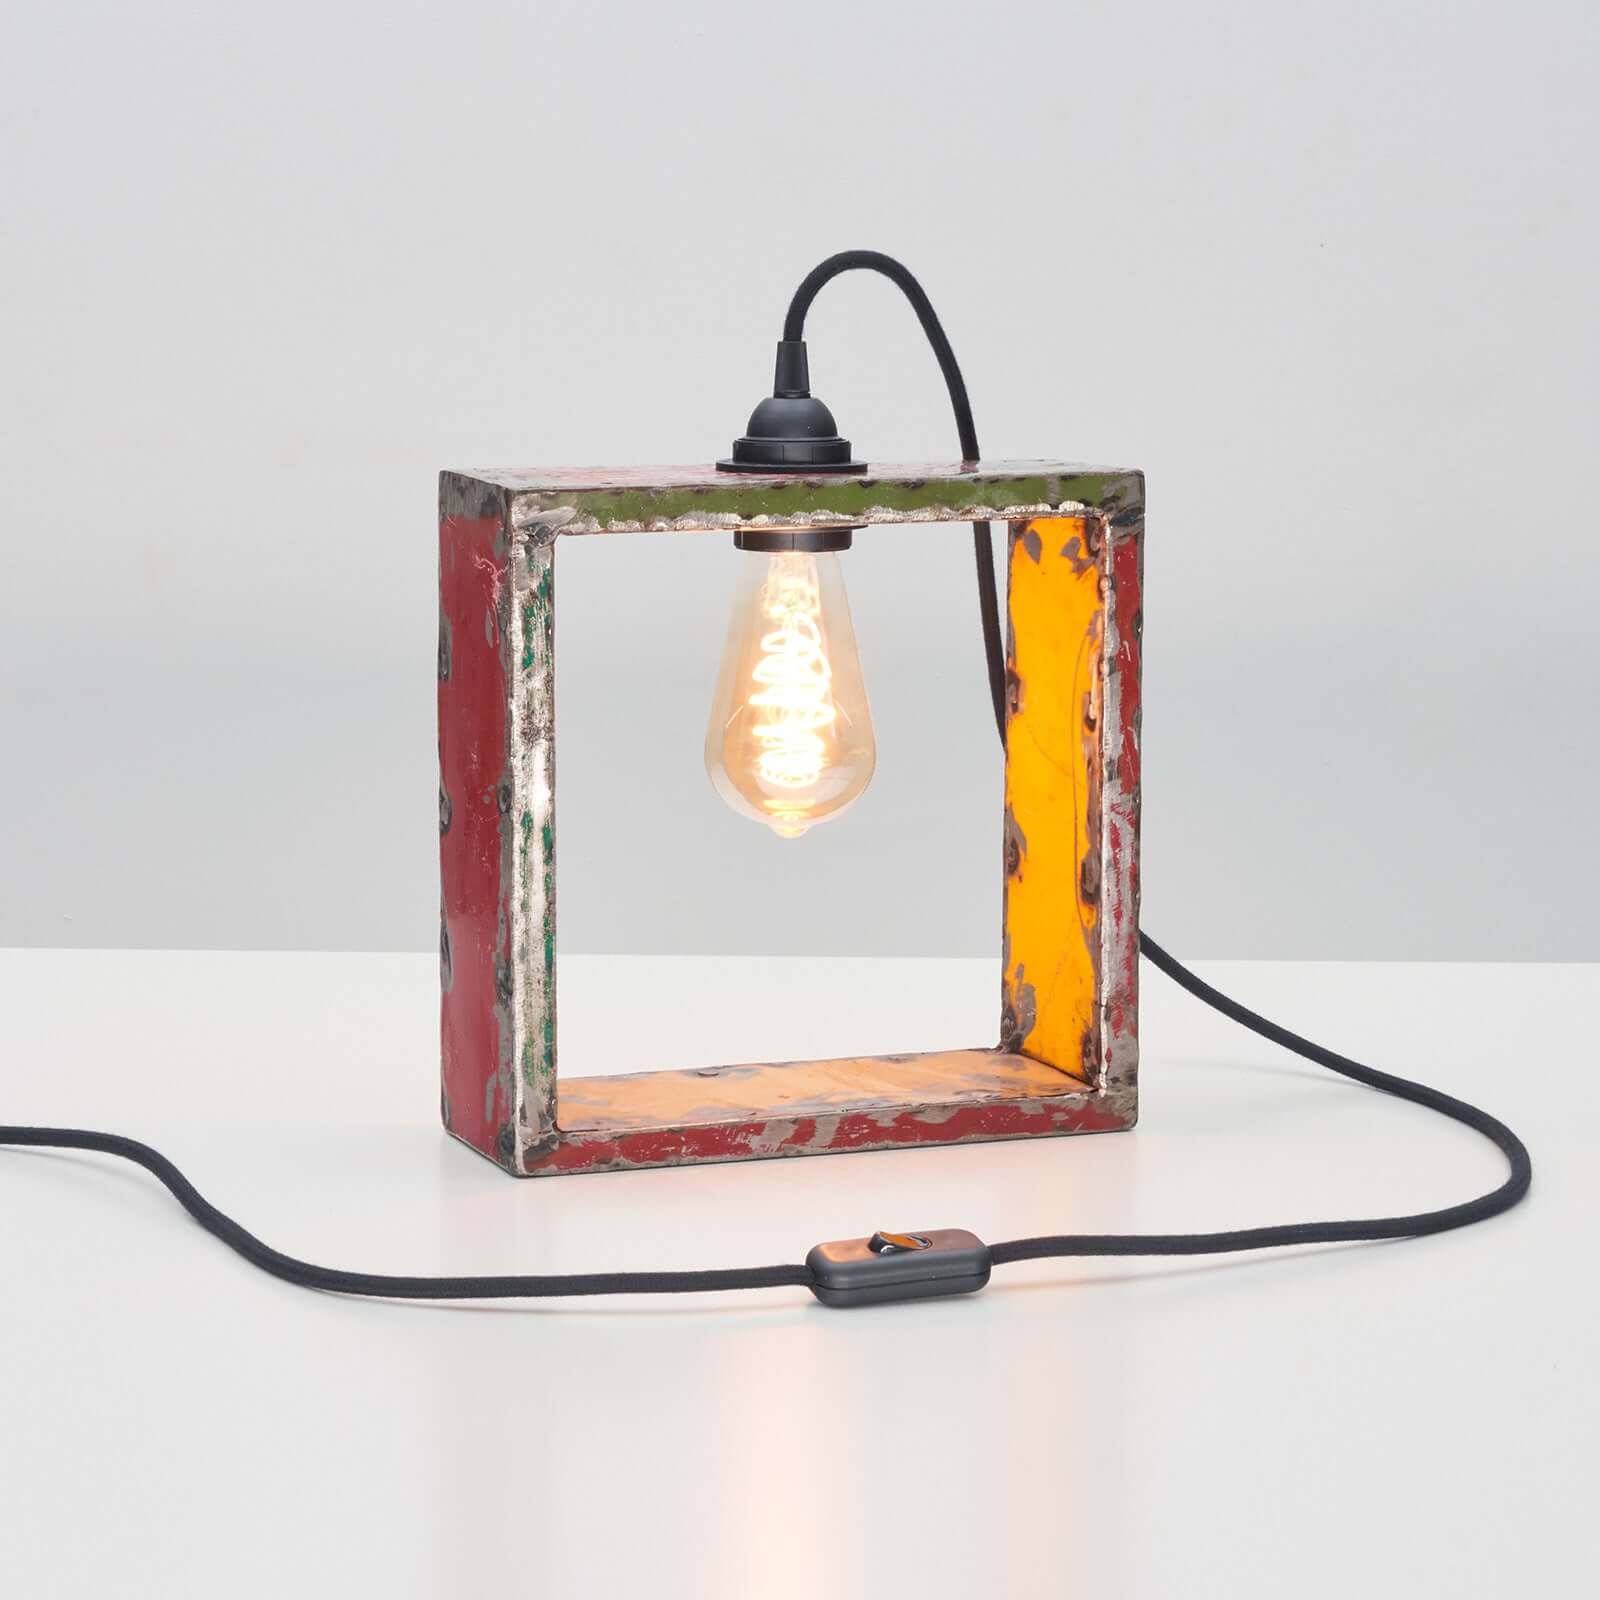 Retro Glühbirne Lampe, Glas, blau - LED-Licht - Traumflug Onlineshop